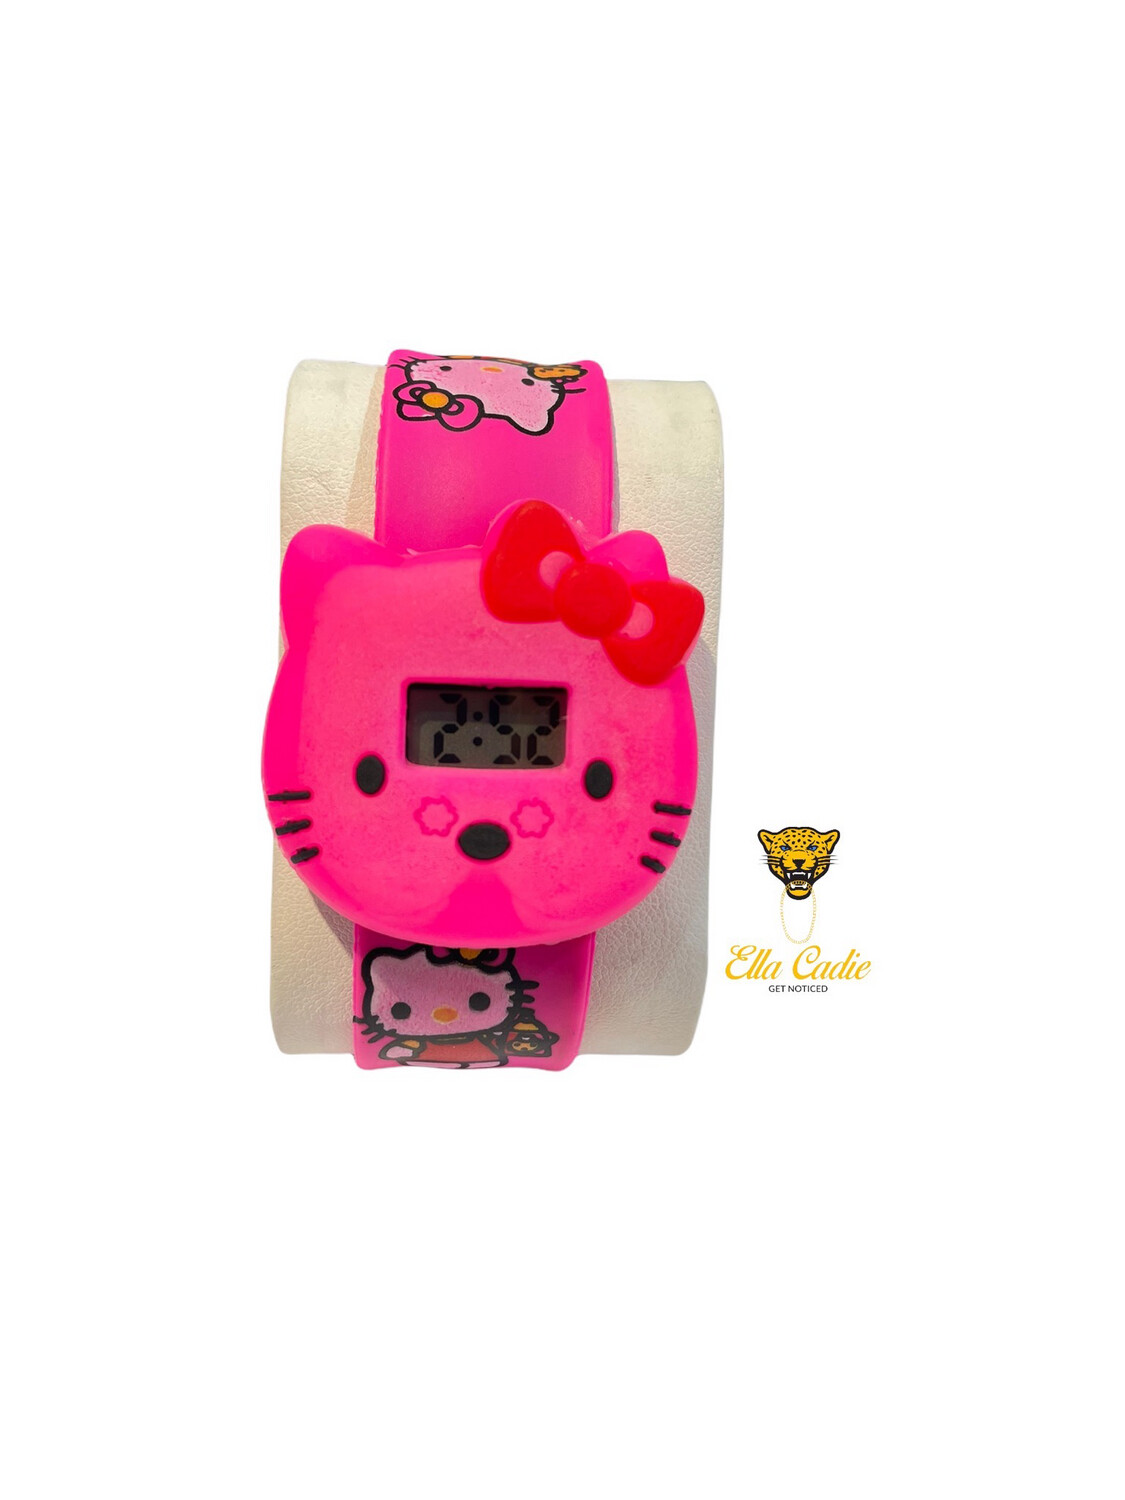 Pink Kitty Watch